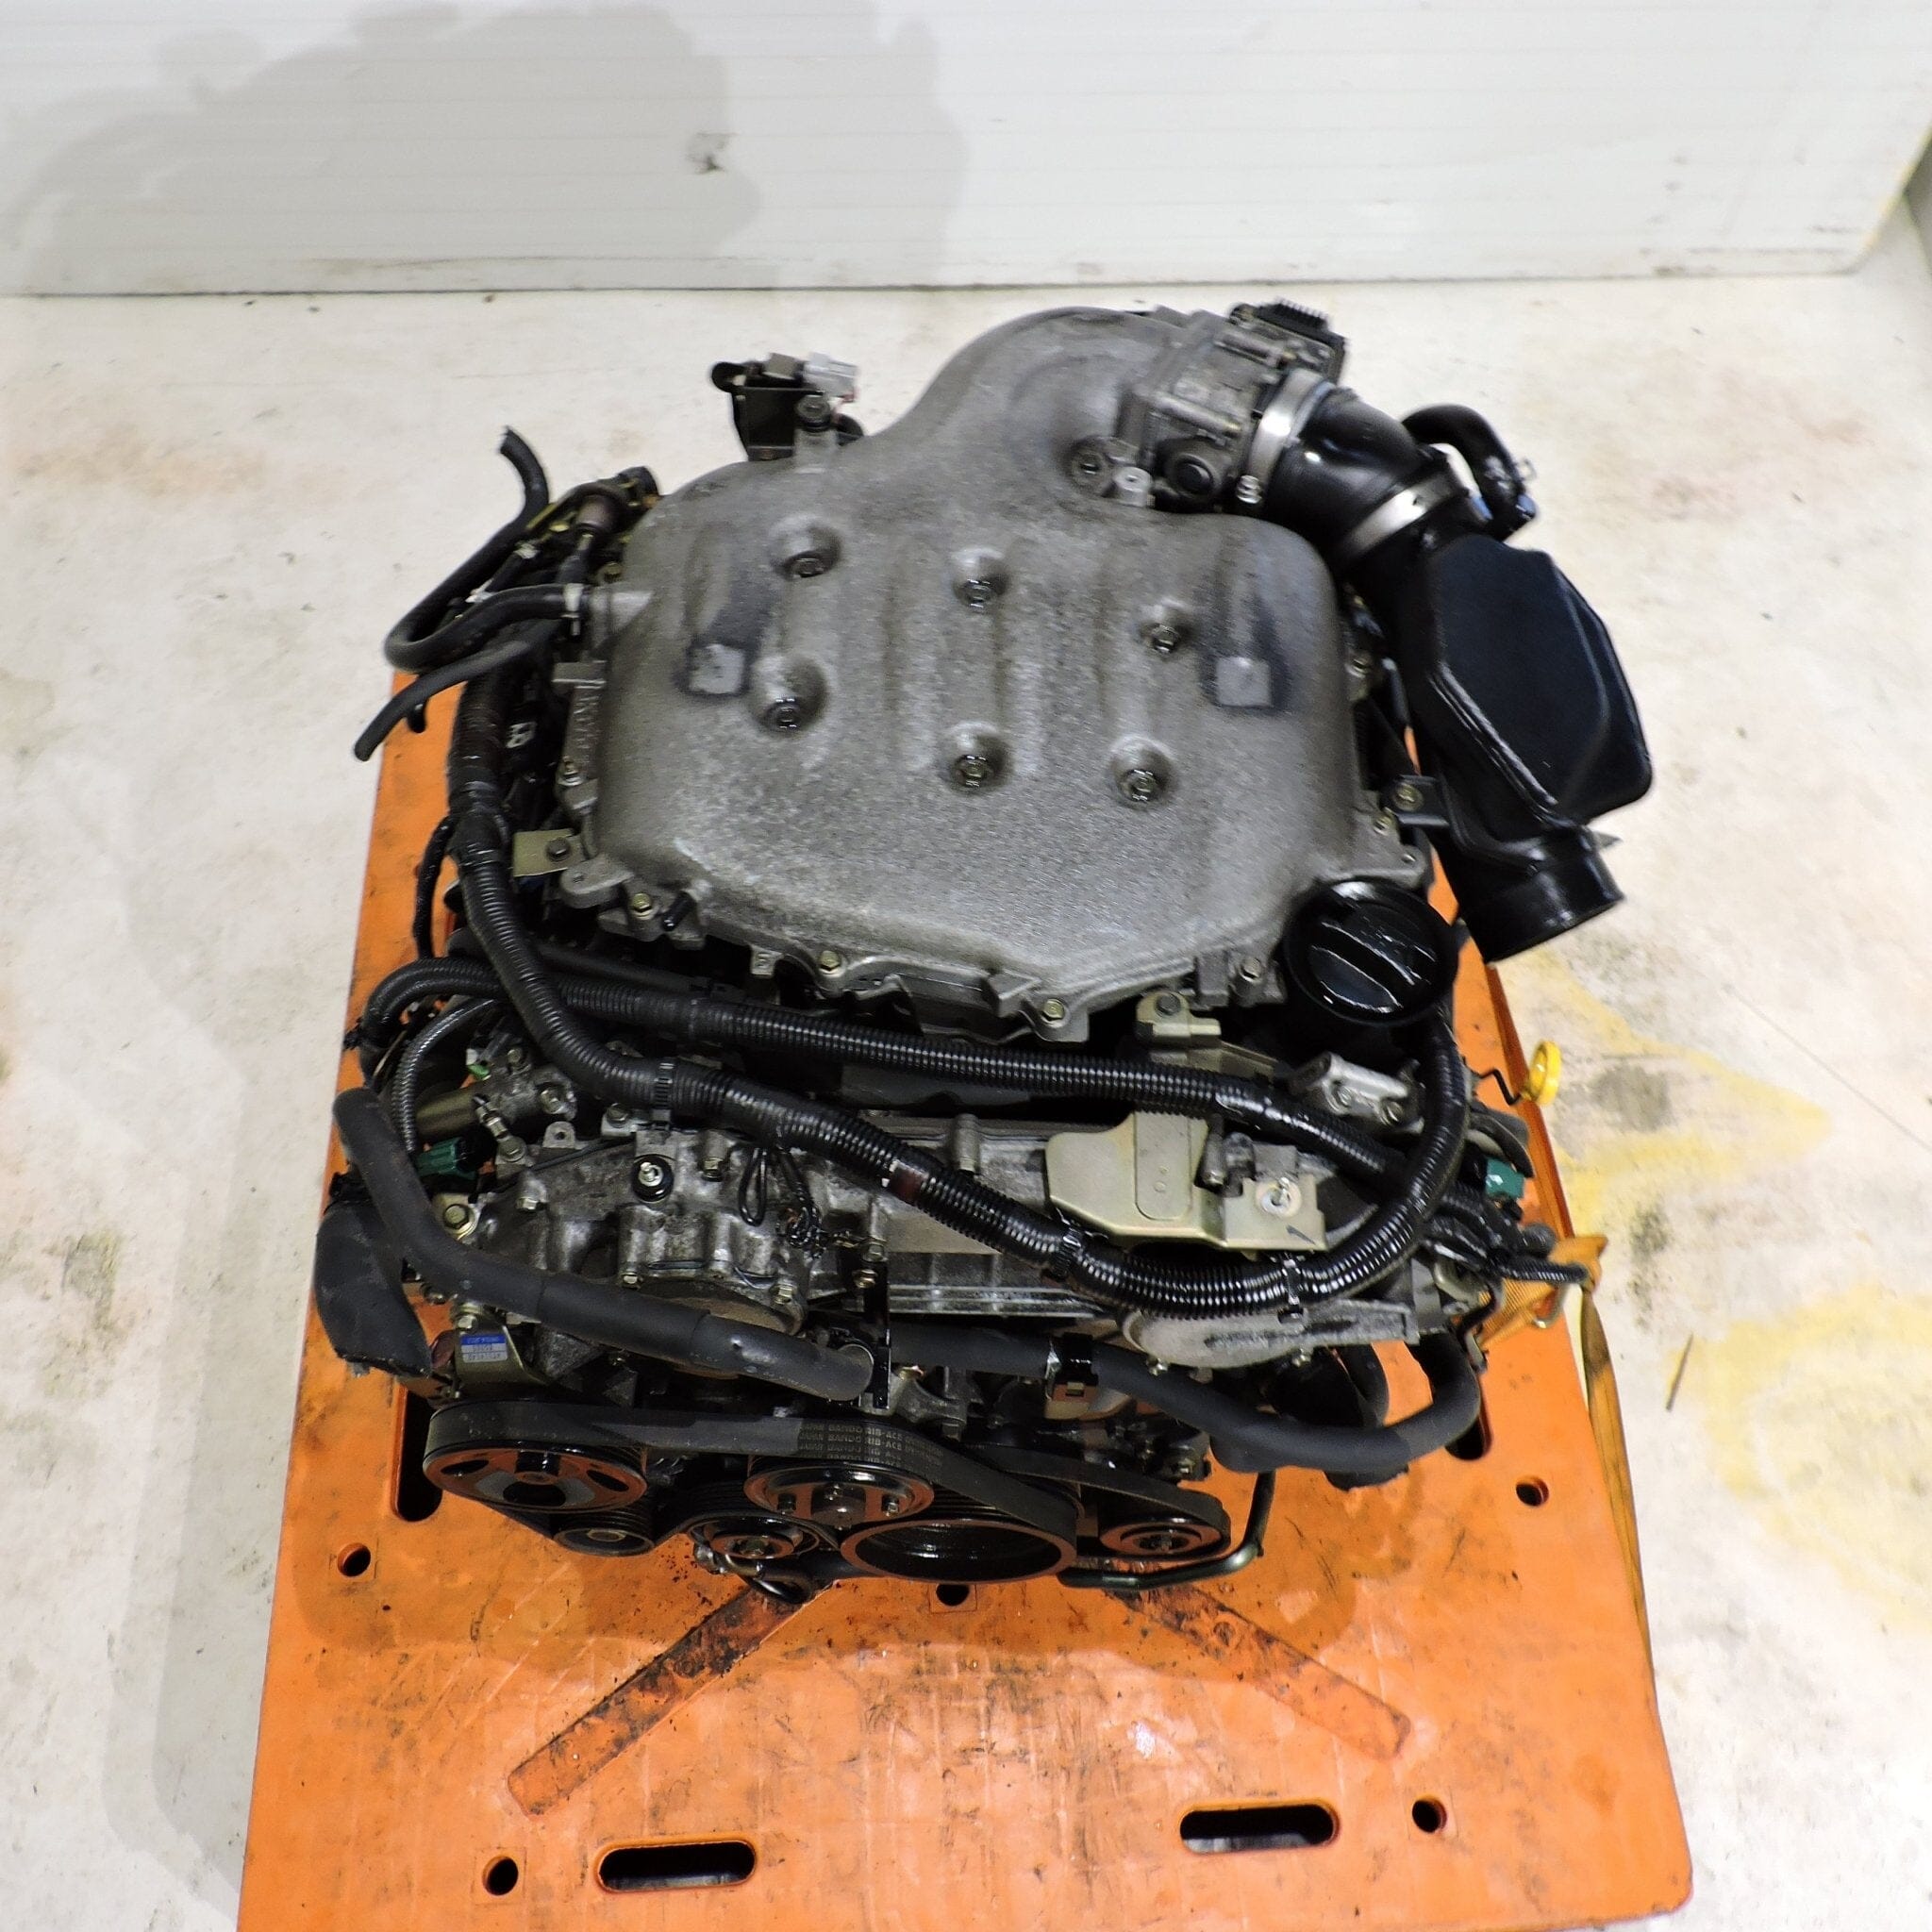 Infiniti G35 (2003-2004) 3.5L V6 JDM Engine - VQ35DE